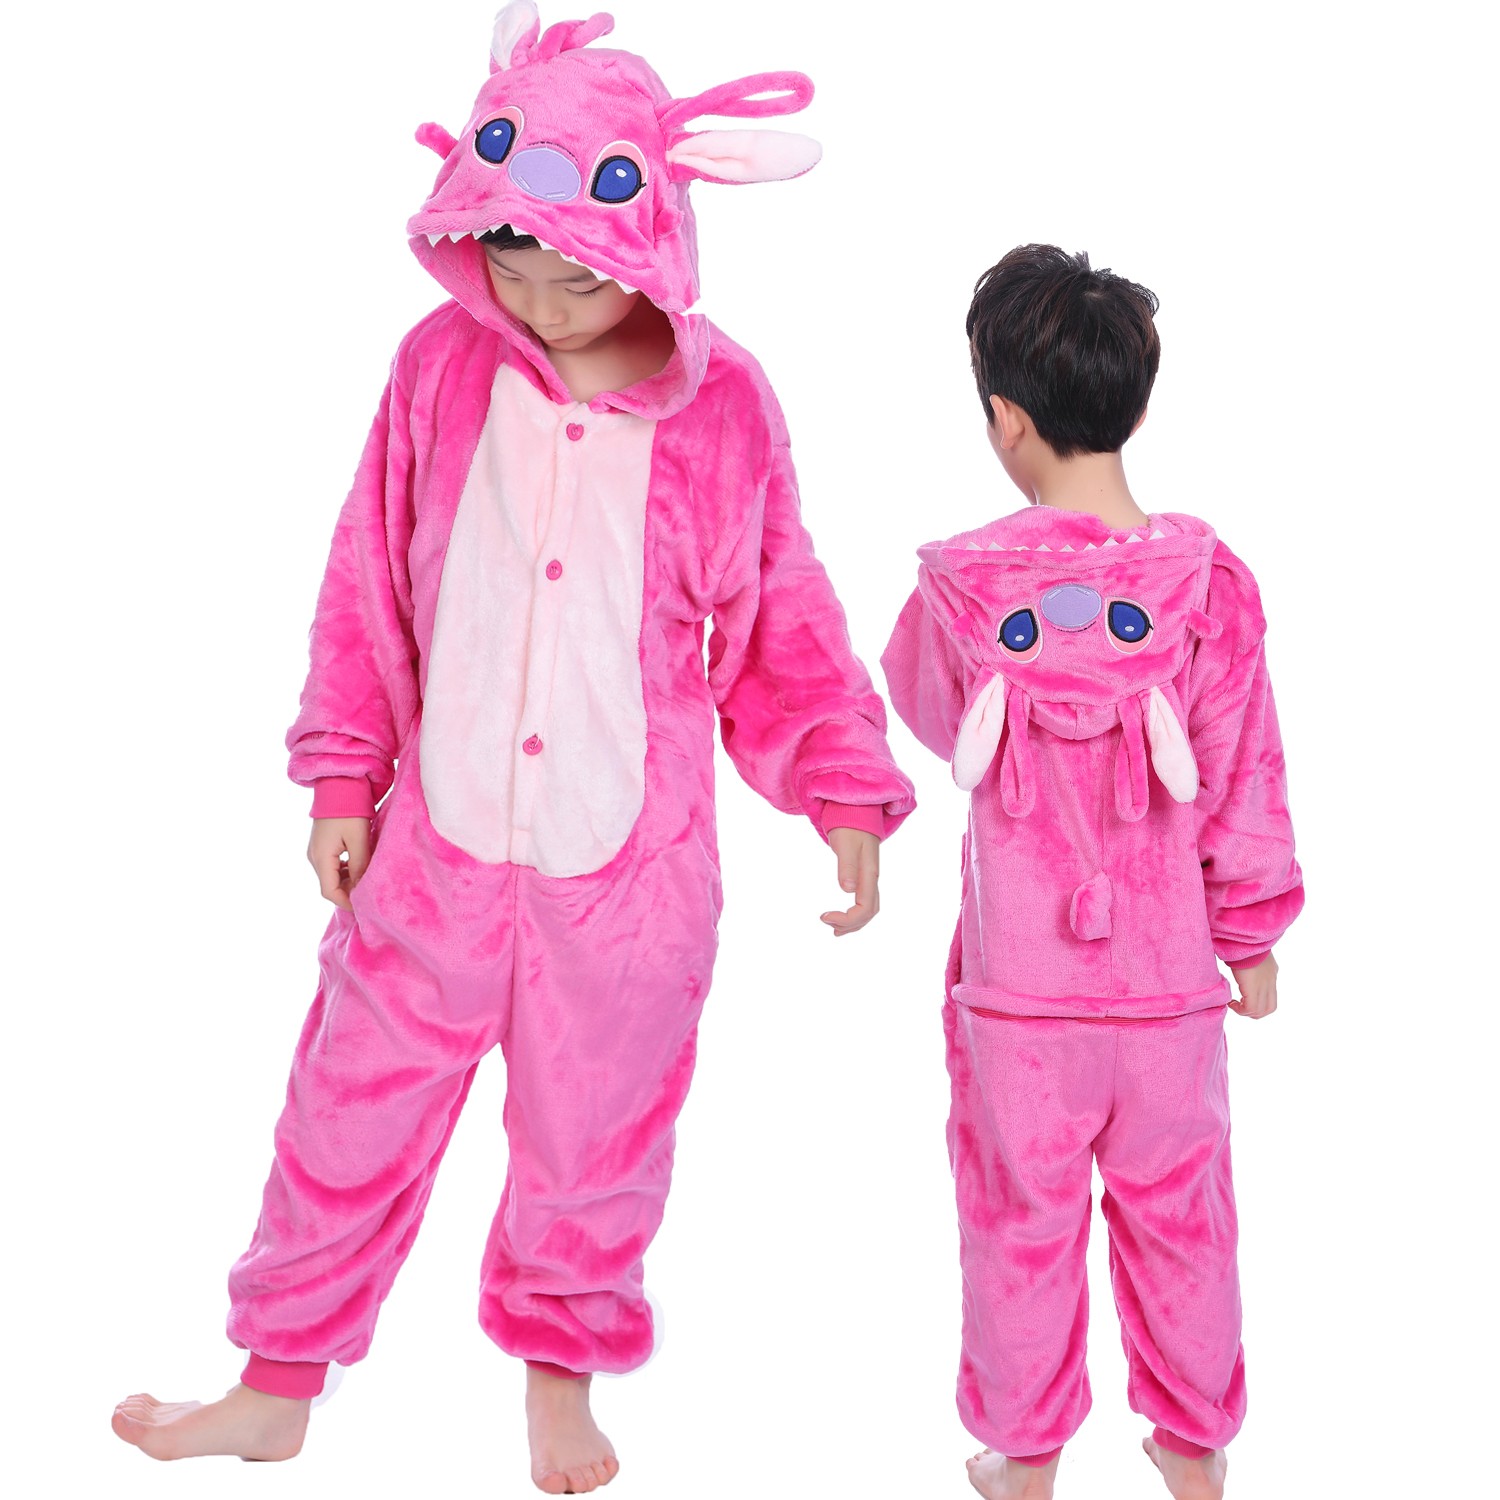 Pink Stitch Onesie Costume Pajama Kids Animal Outfit for Boys & Girls - Favounicorn.com